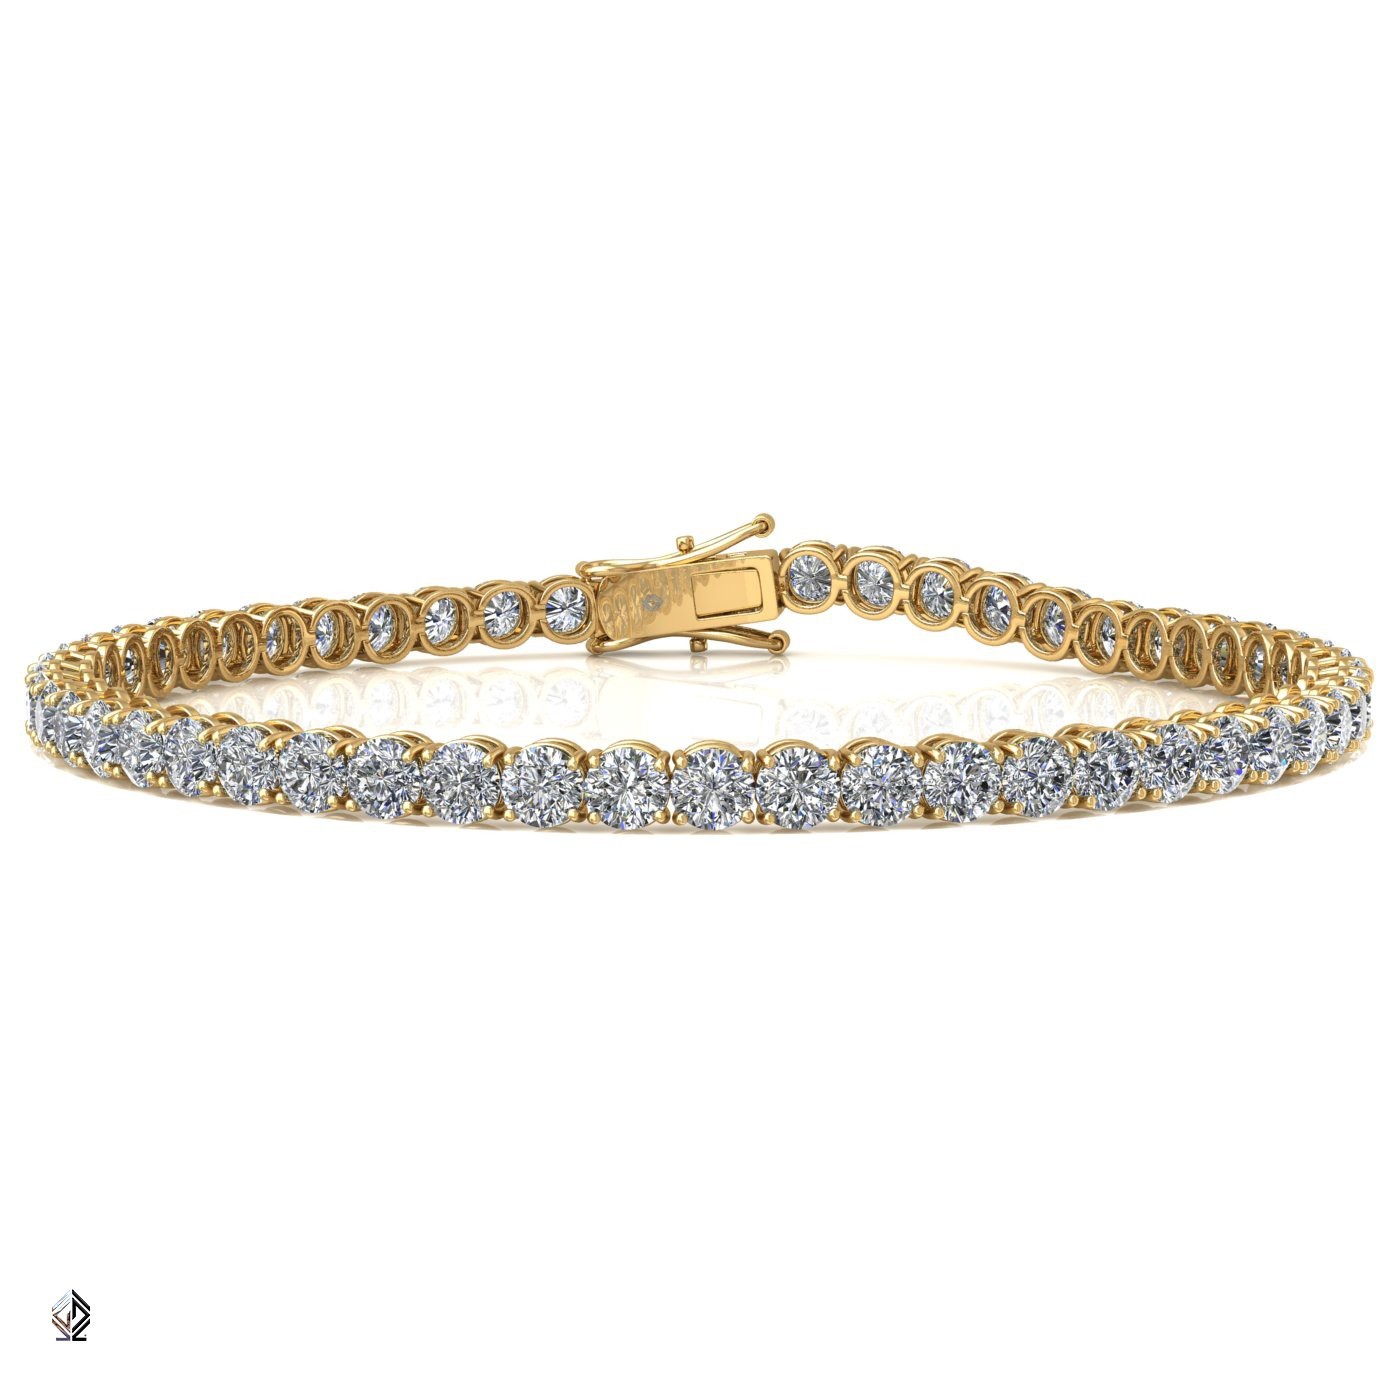 18k yellow gold 3.0 mm 4 prong round shape diamond tennis bracelet in round setting